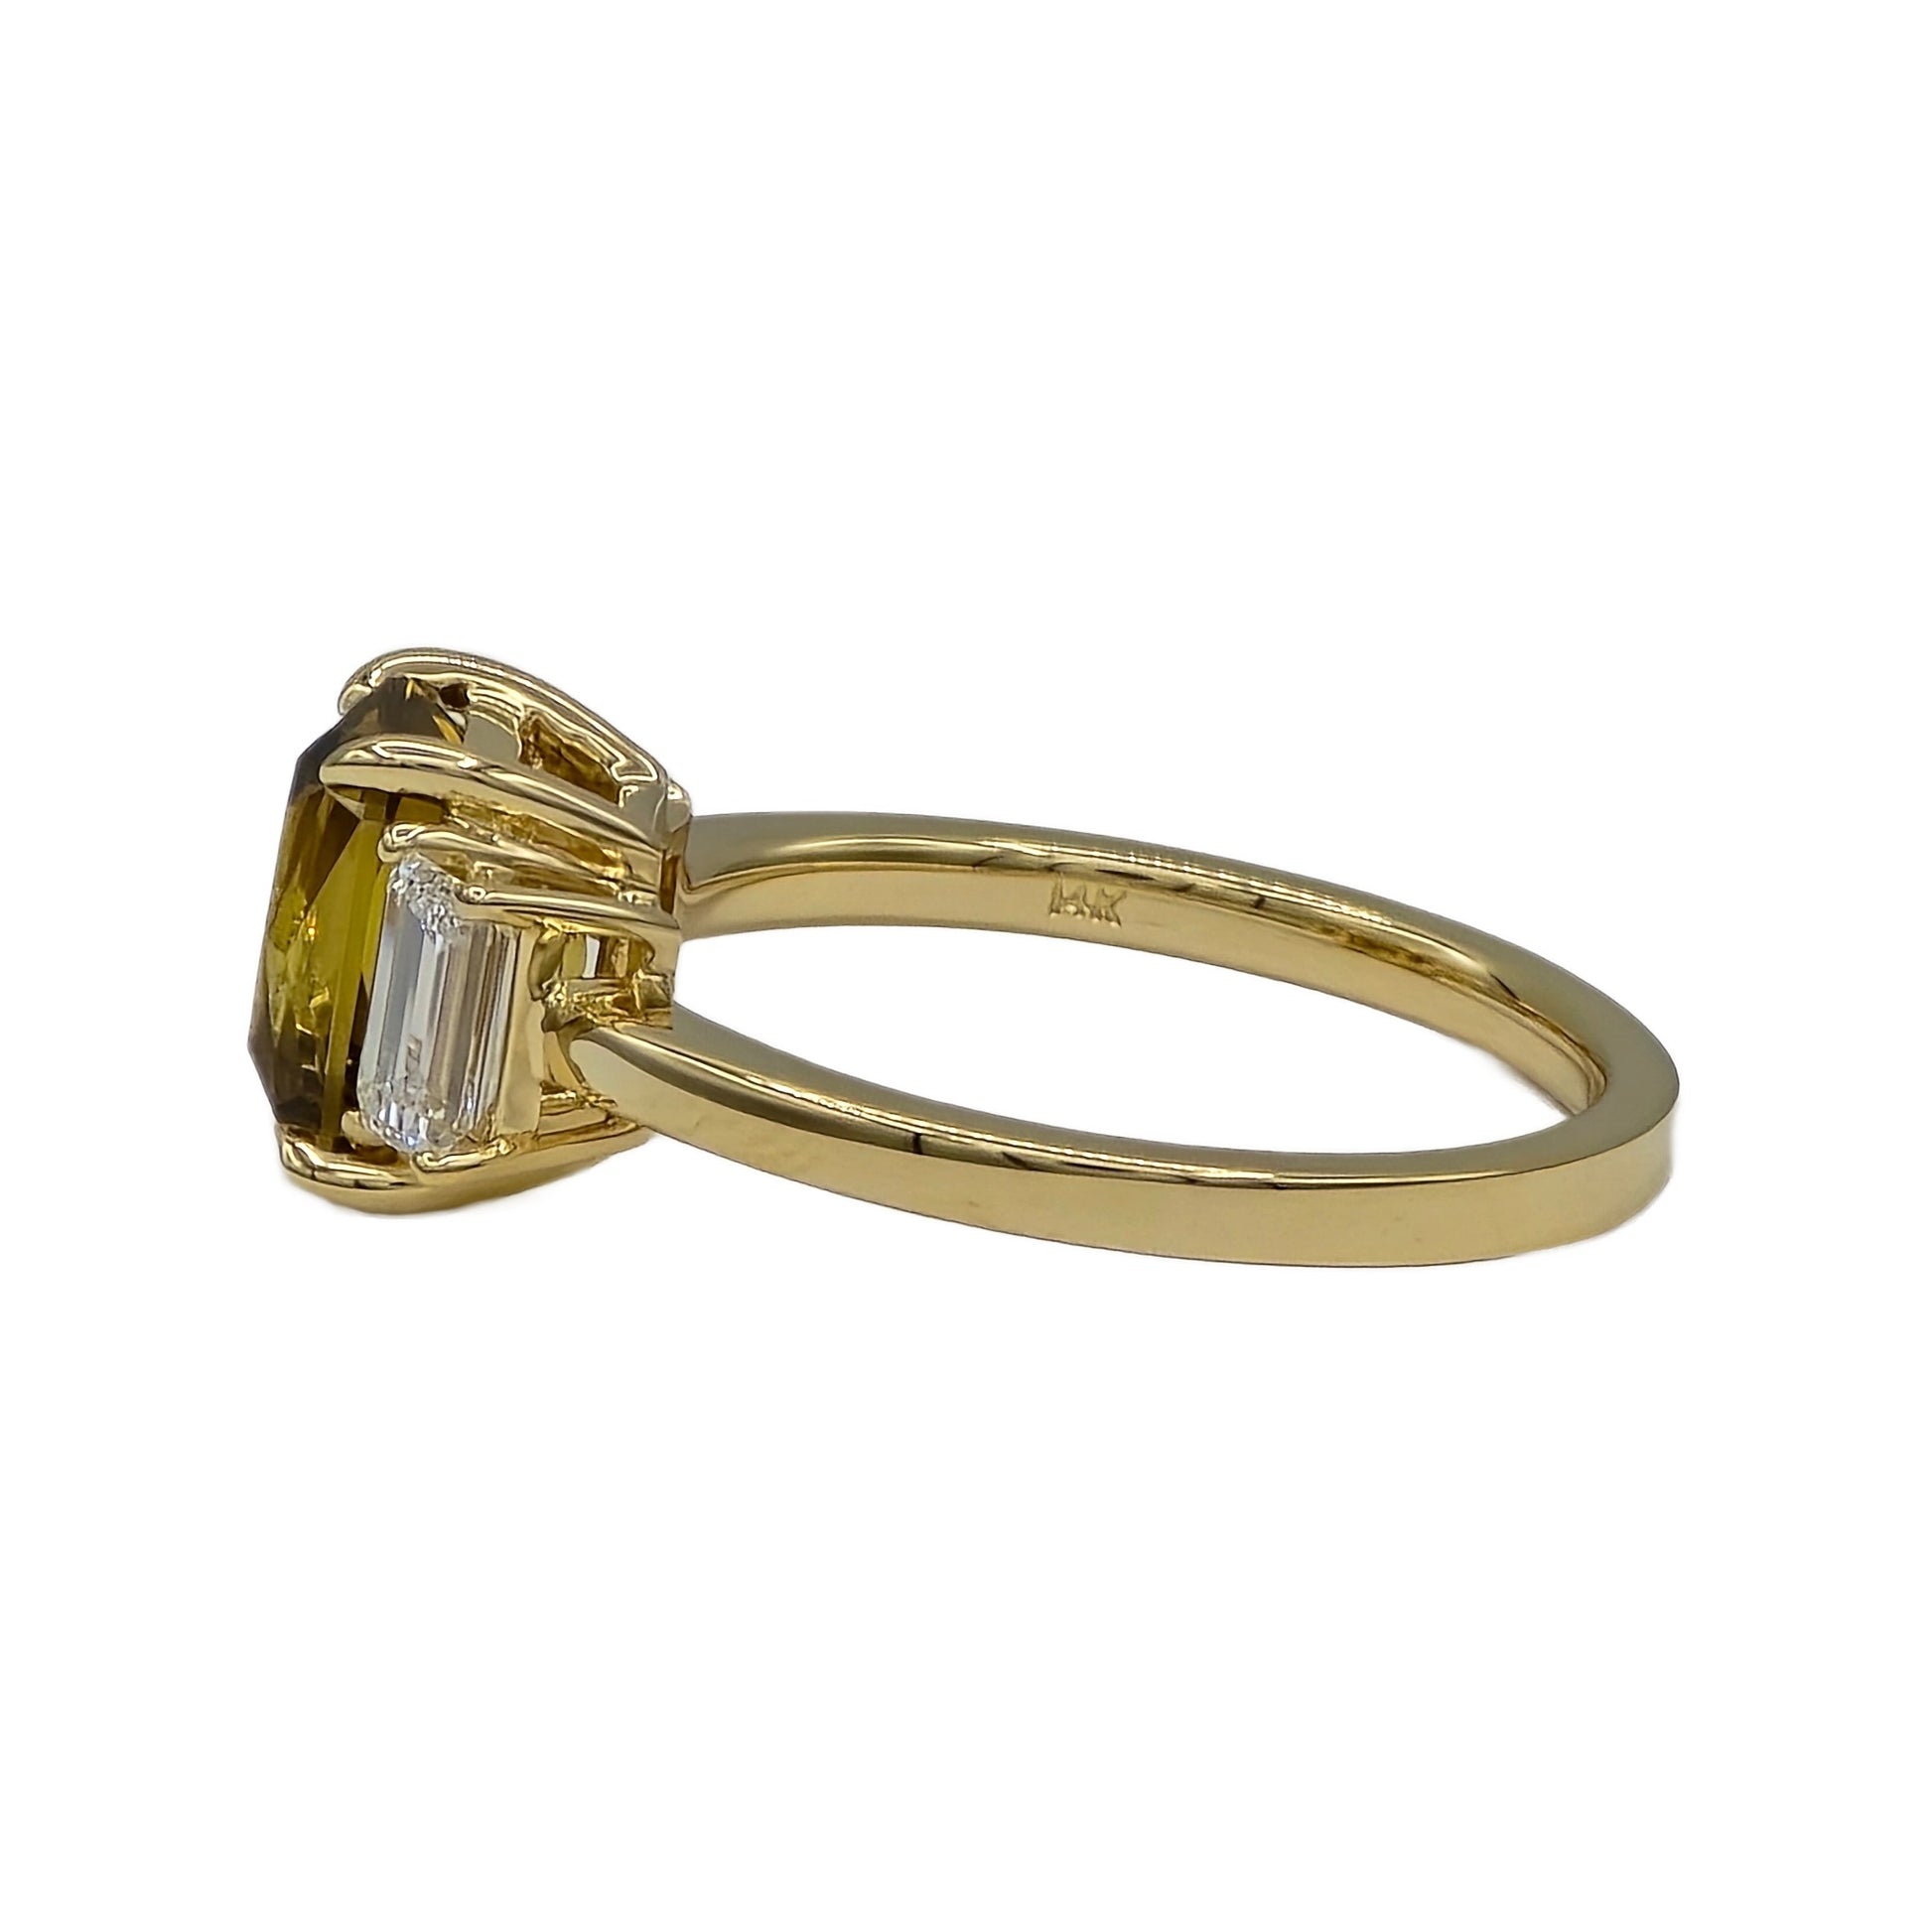 Mali Garnet and Diamond Ring in 14K yellow gold